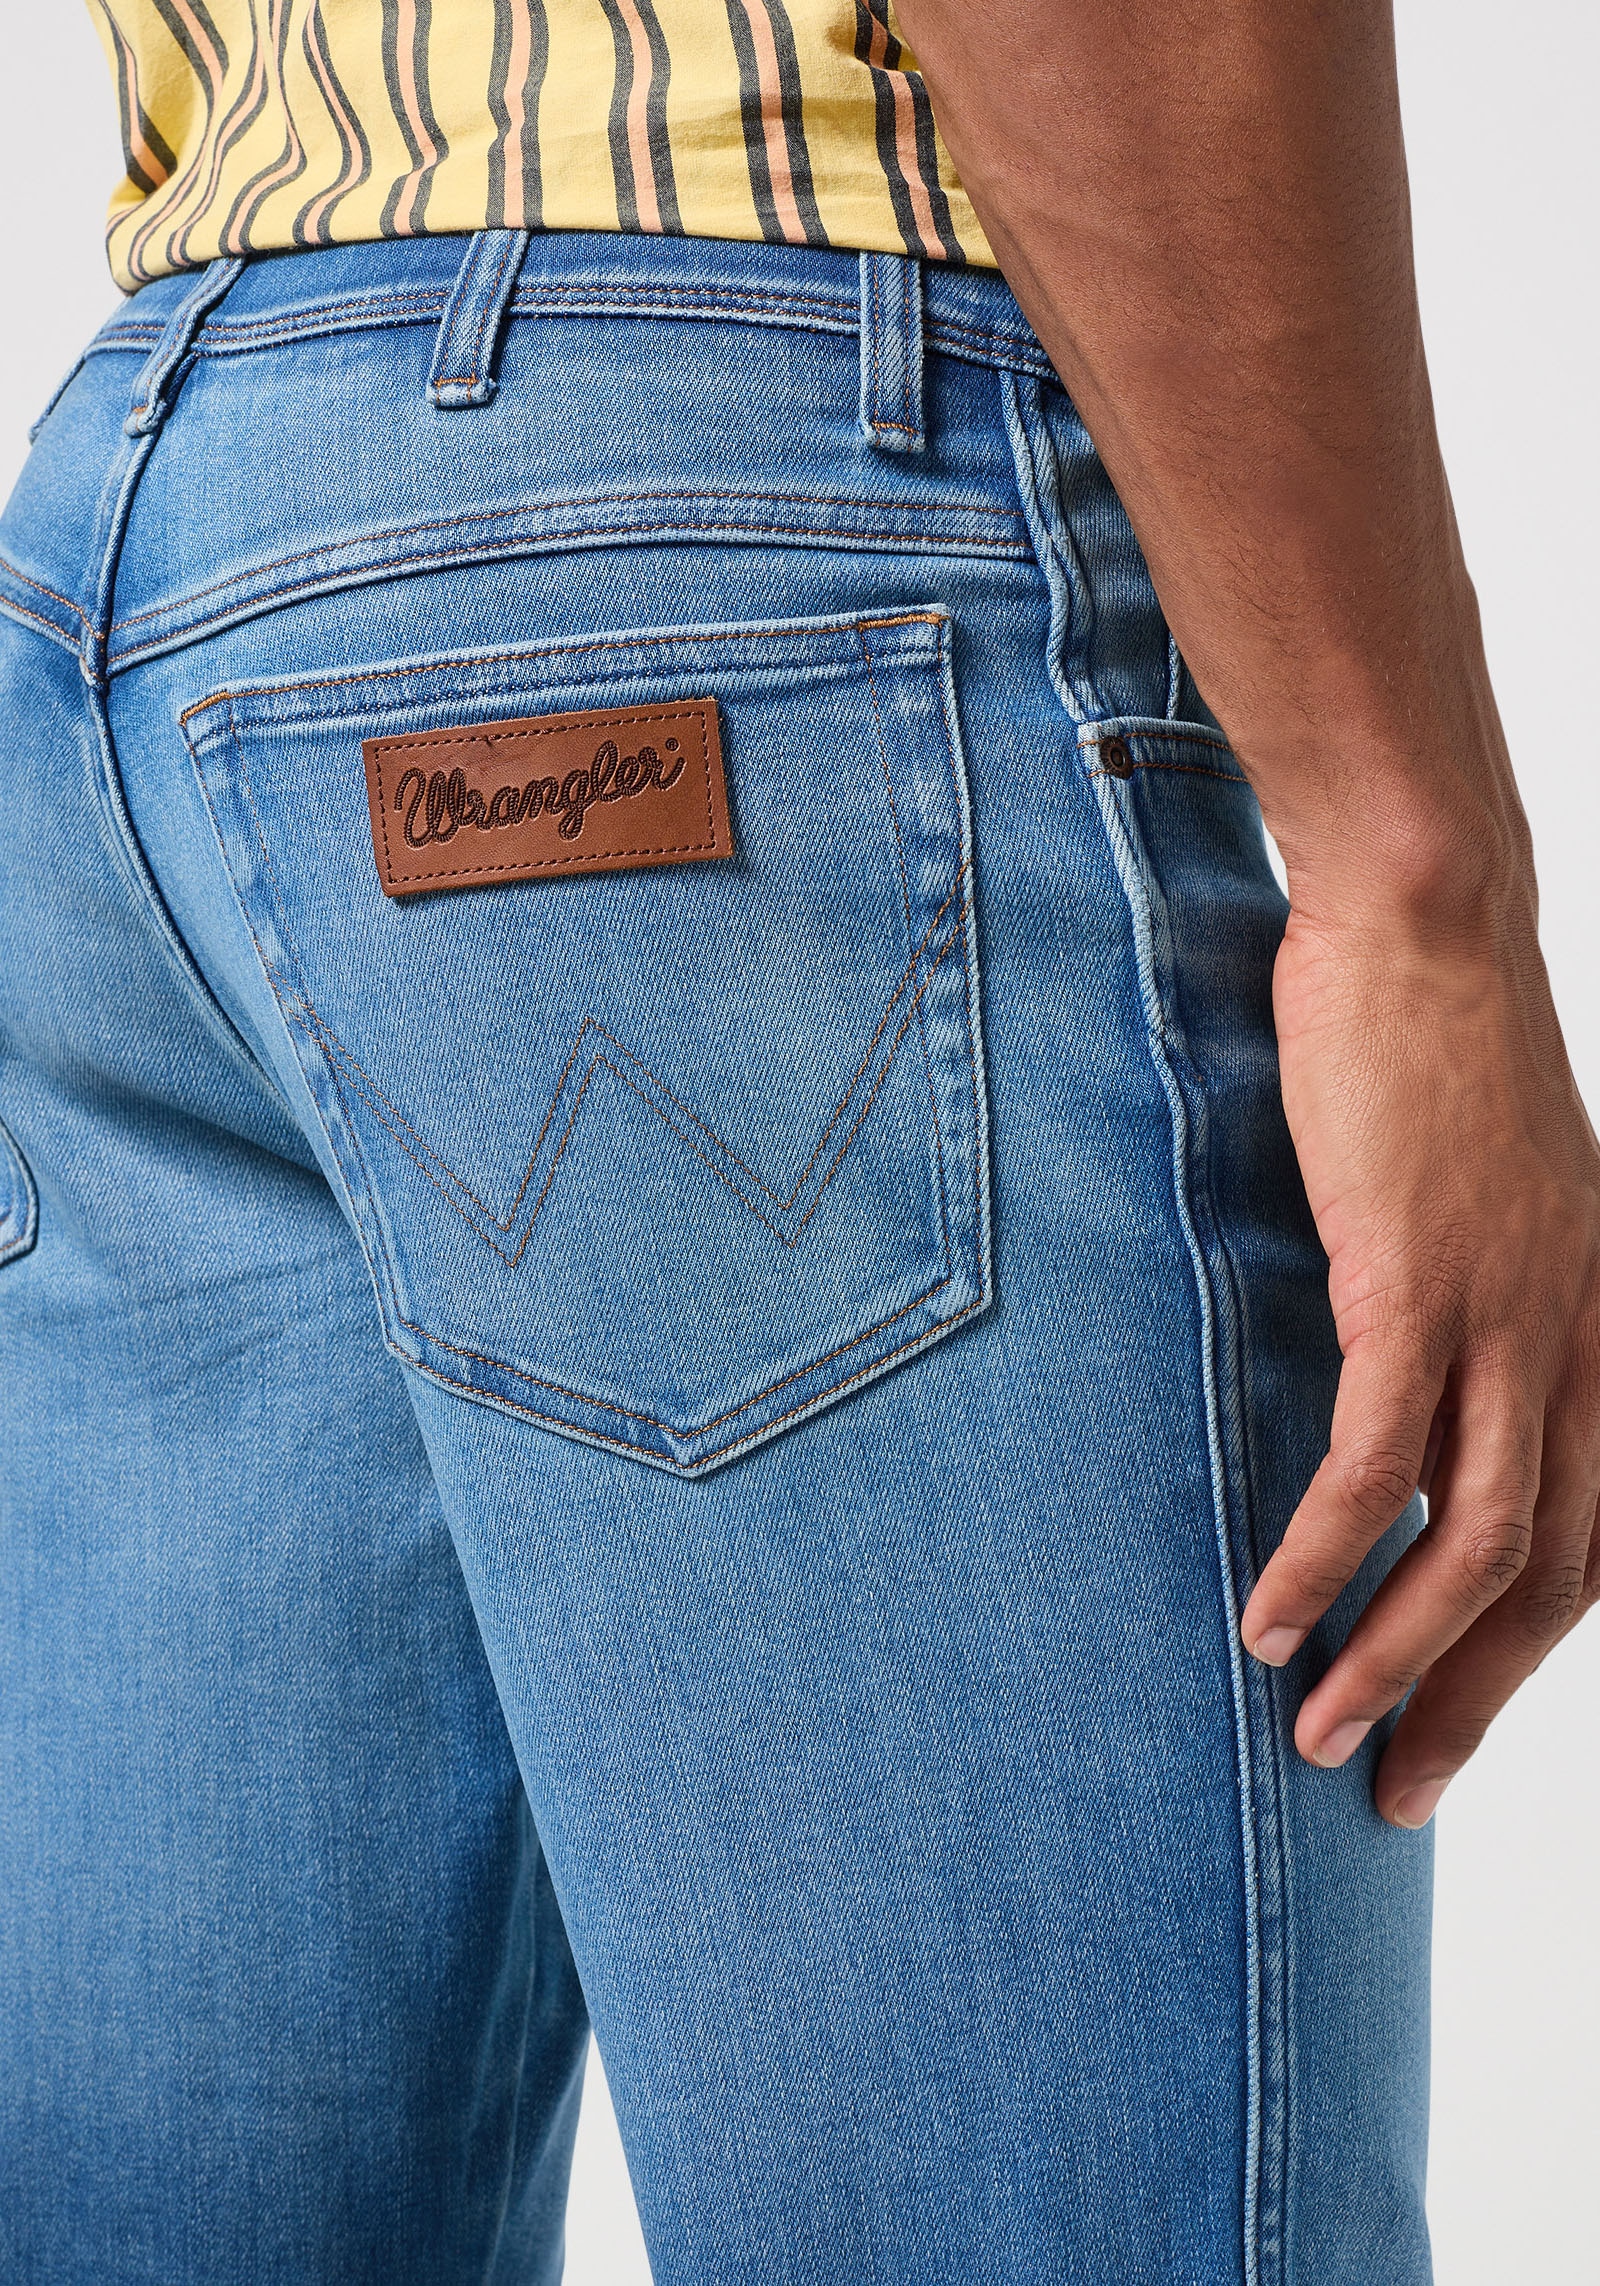 Wrangler 5-Pocket-Jeans »TEXAS FREE TO STRETCH«, Free to stretch material